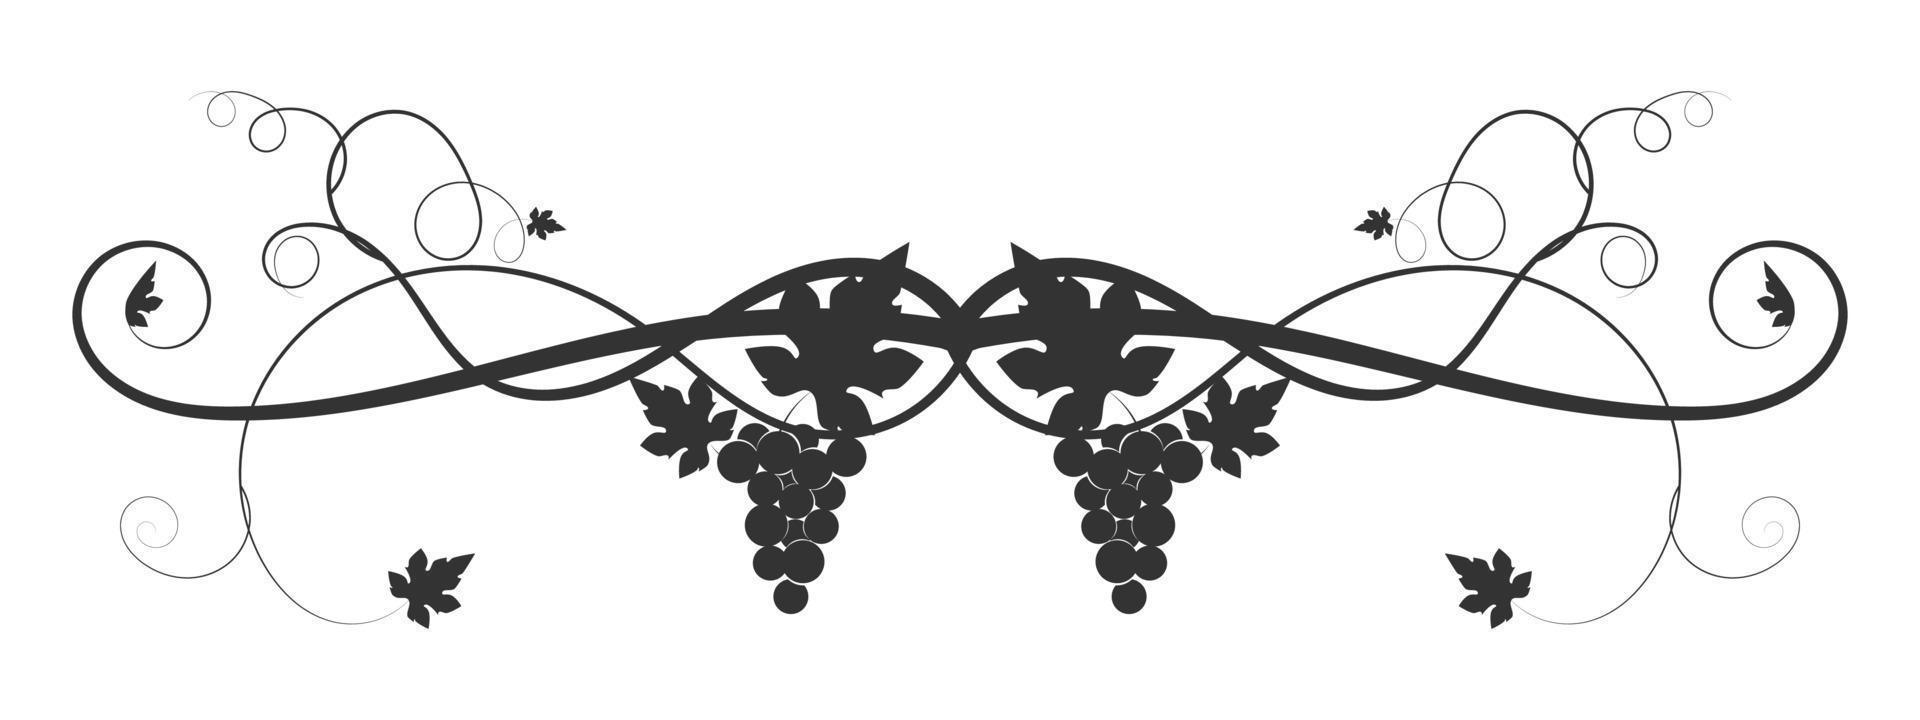 drawn vine grape weaving on a white background vector